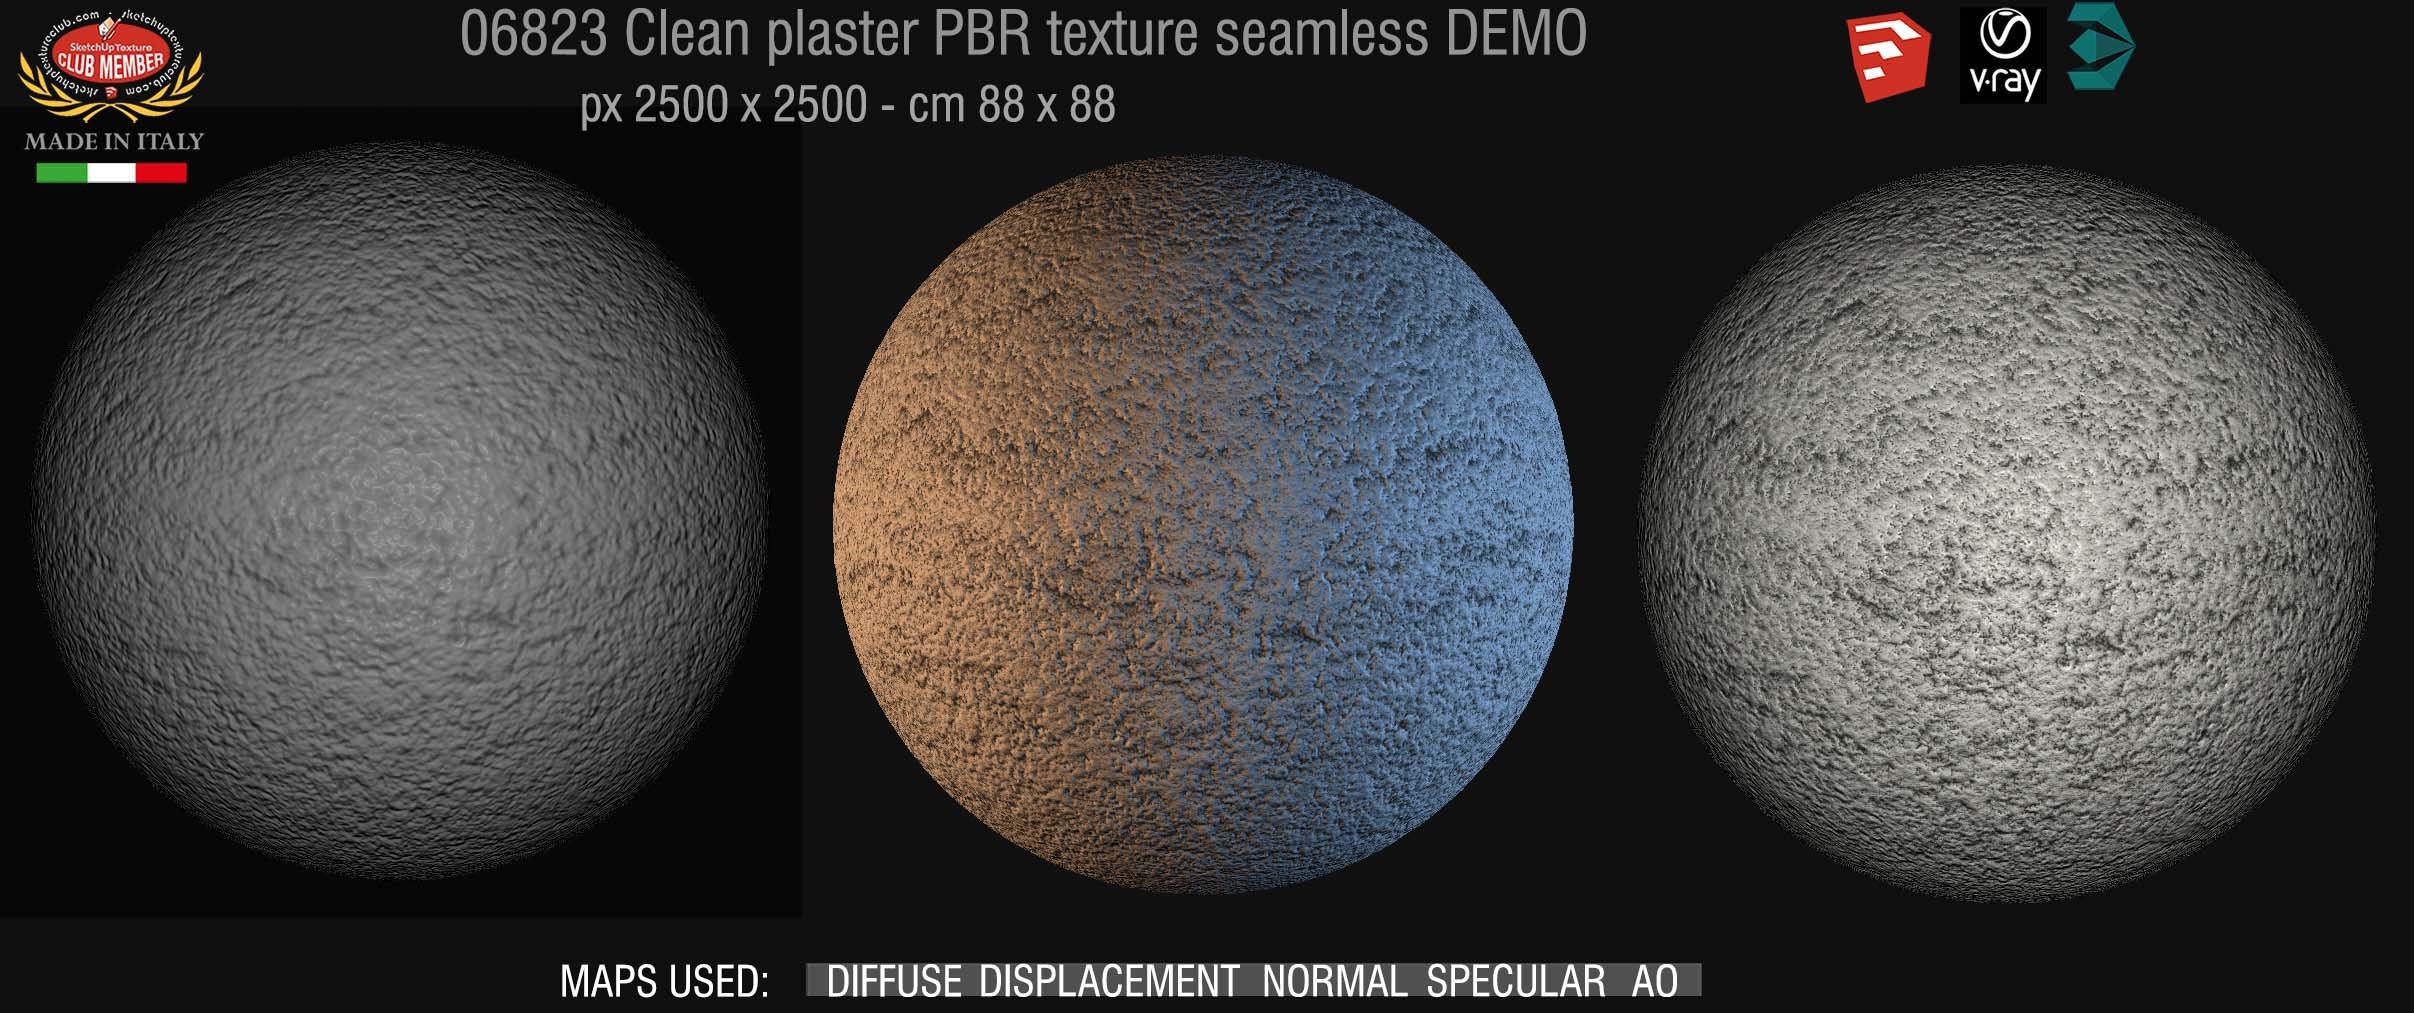 06823 Clean plaster PBR texture seamless DEMO